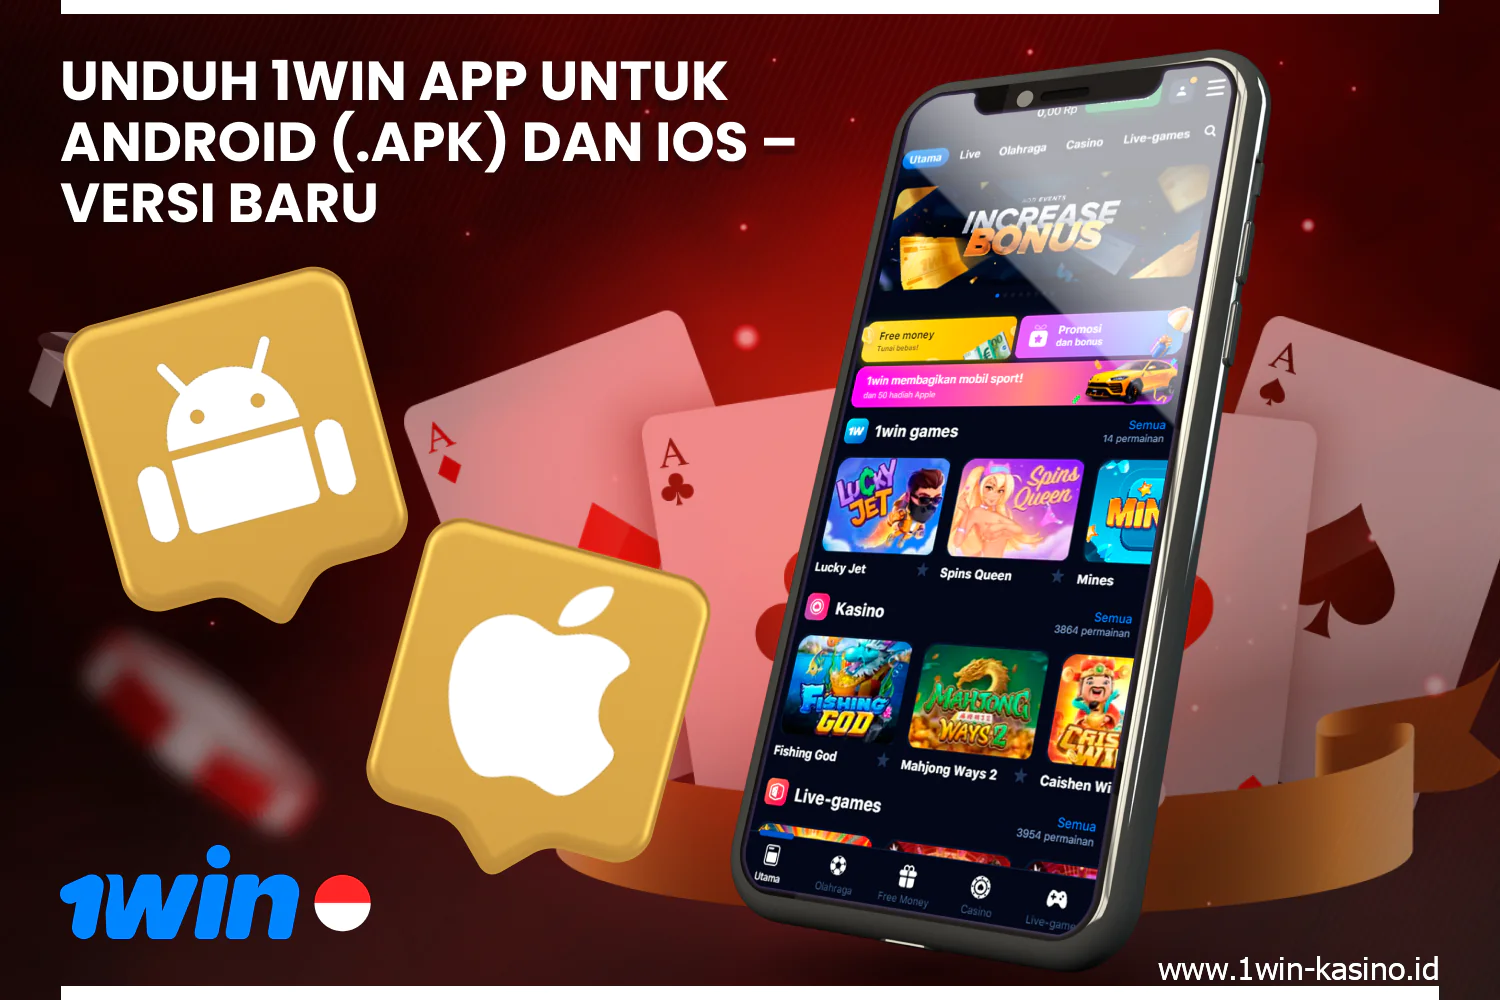 Di aplikasi seluler 1win, pengguna Indonesia dapat memasang taruhan olahraga, mengelola akun, dan memainkan permainan kasino